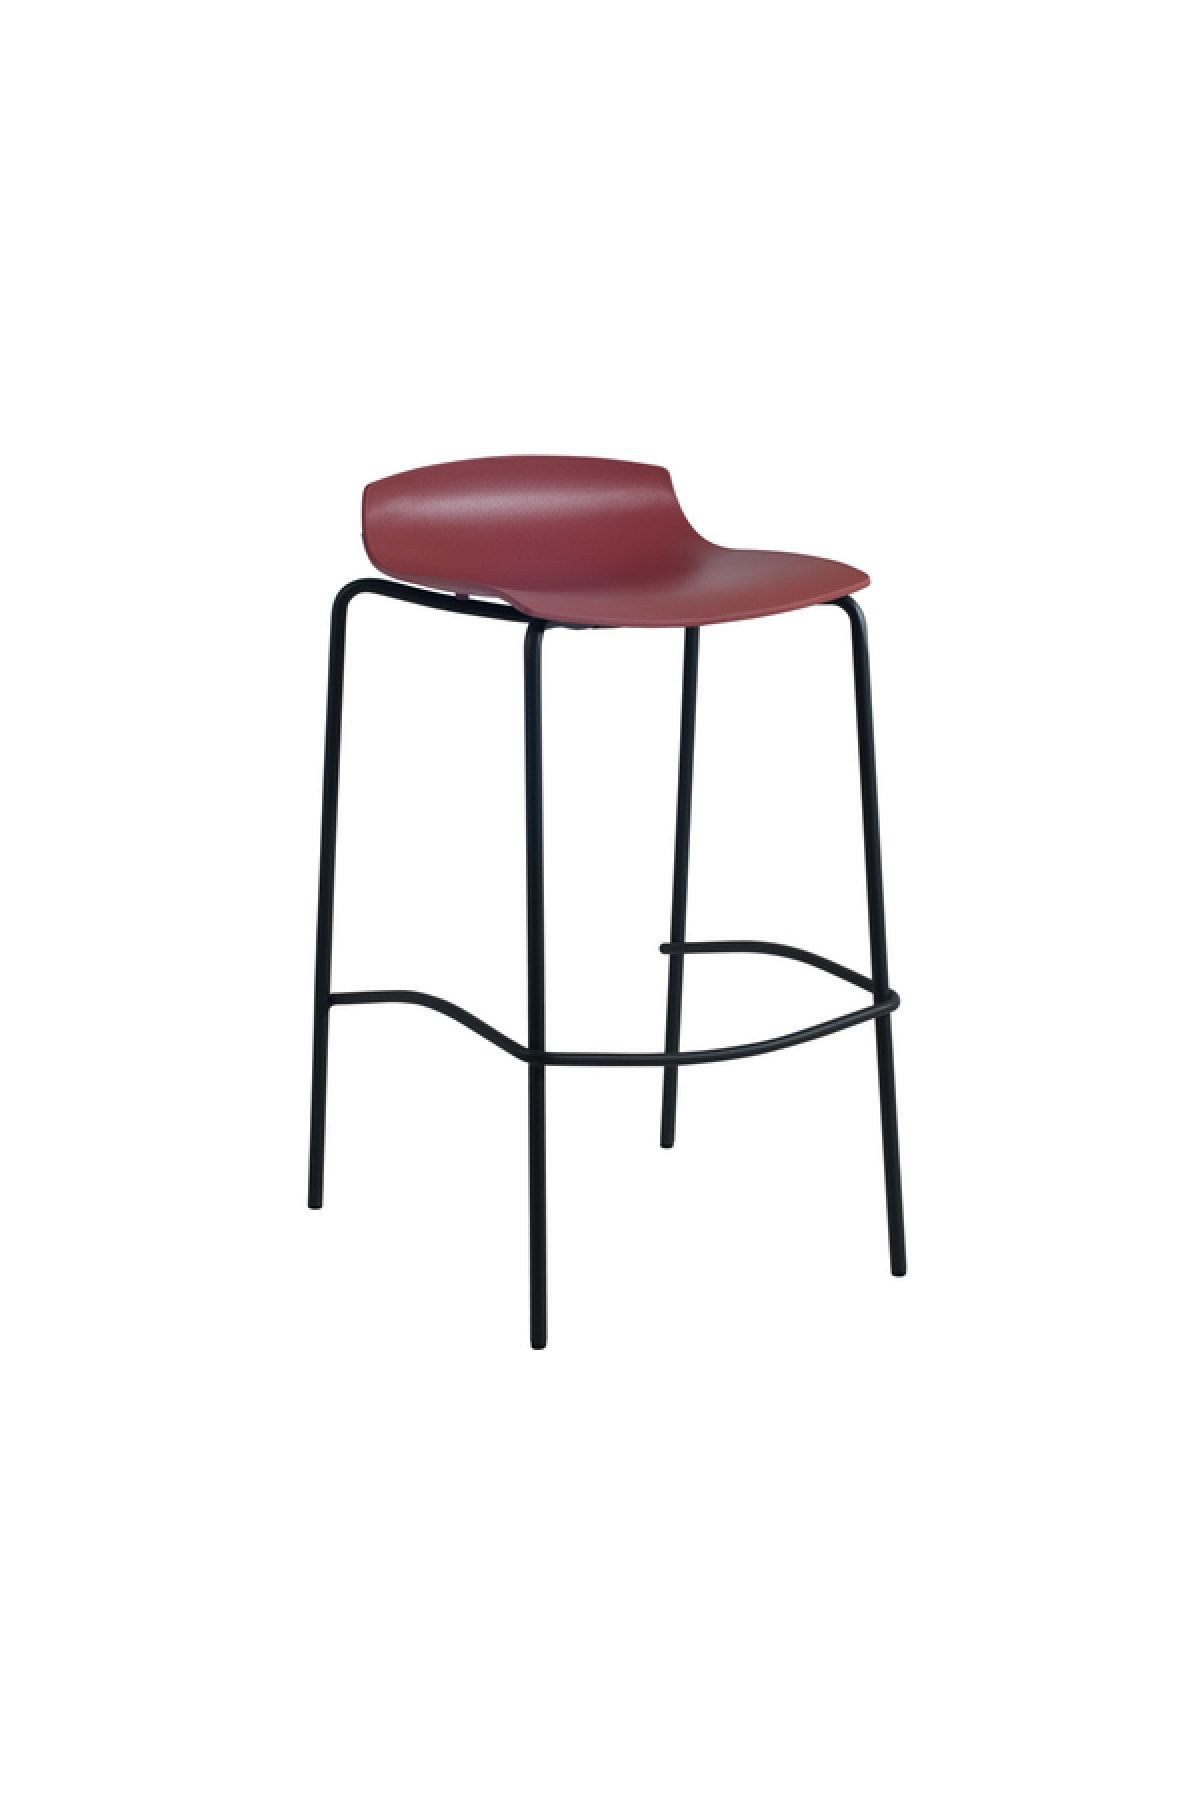 Papatya X-treme Bss Pro Bar Sandalyesi Otel Kafe Restoran Mutfak Koyu Kırmızı- Siyah